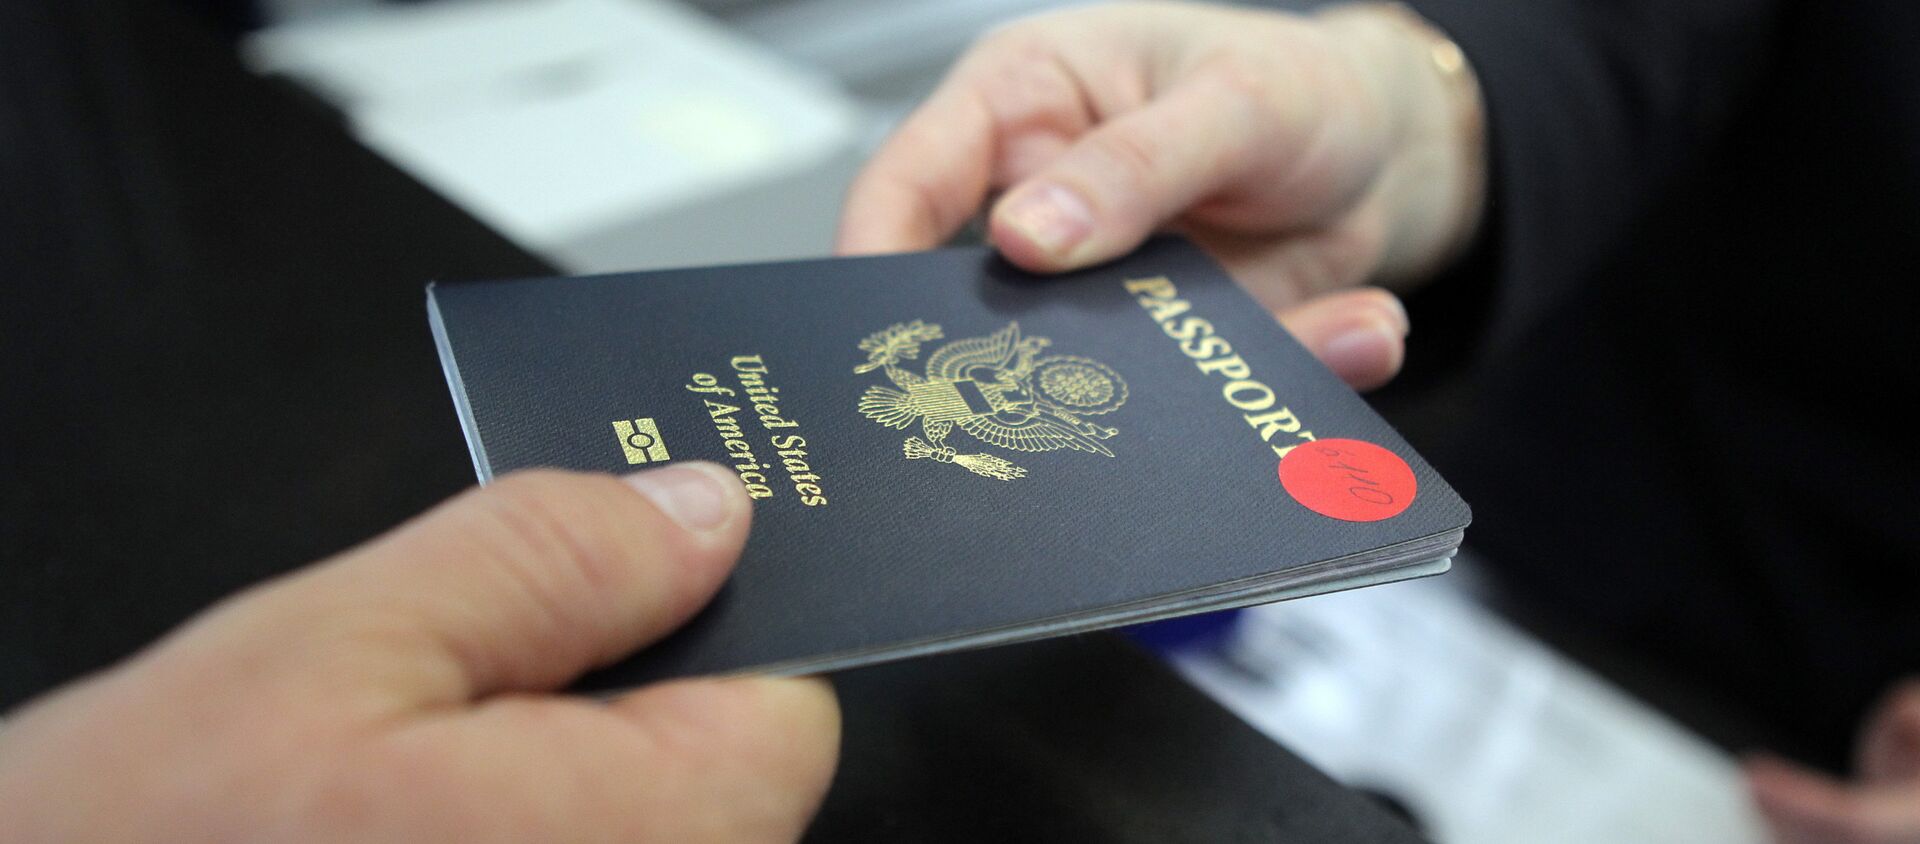 Пассажир предъявляет паспорт гражданина США - Sputnik Արմենիա, 1920, 28.04.2021